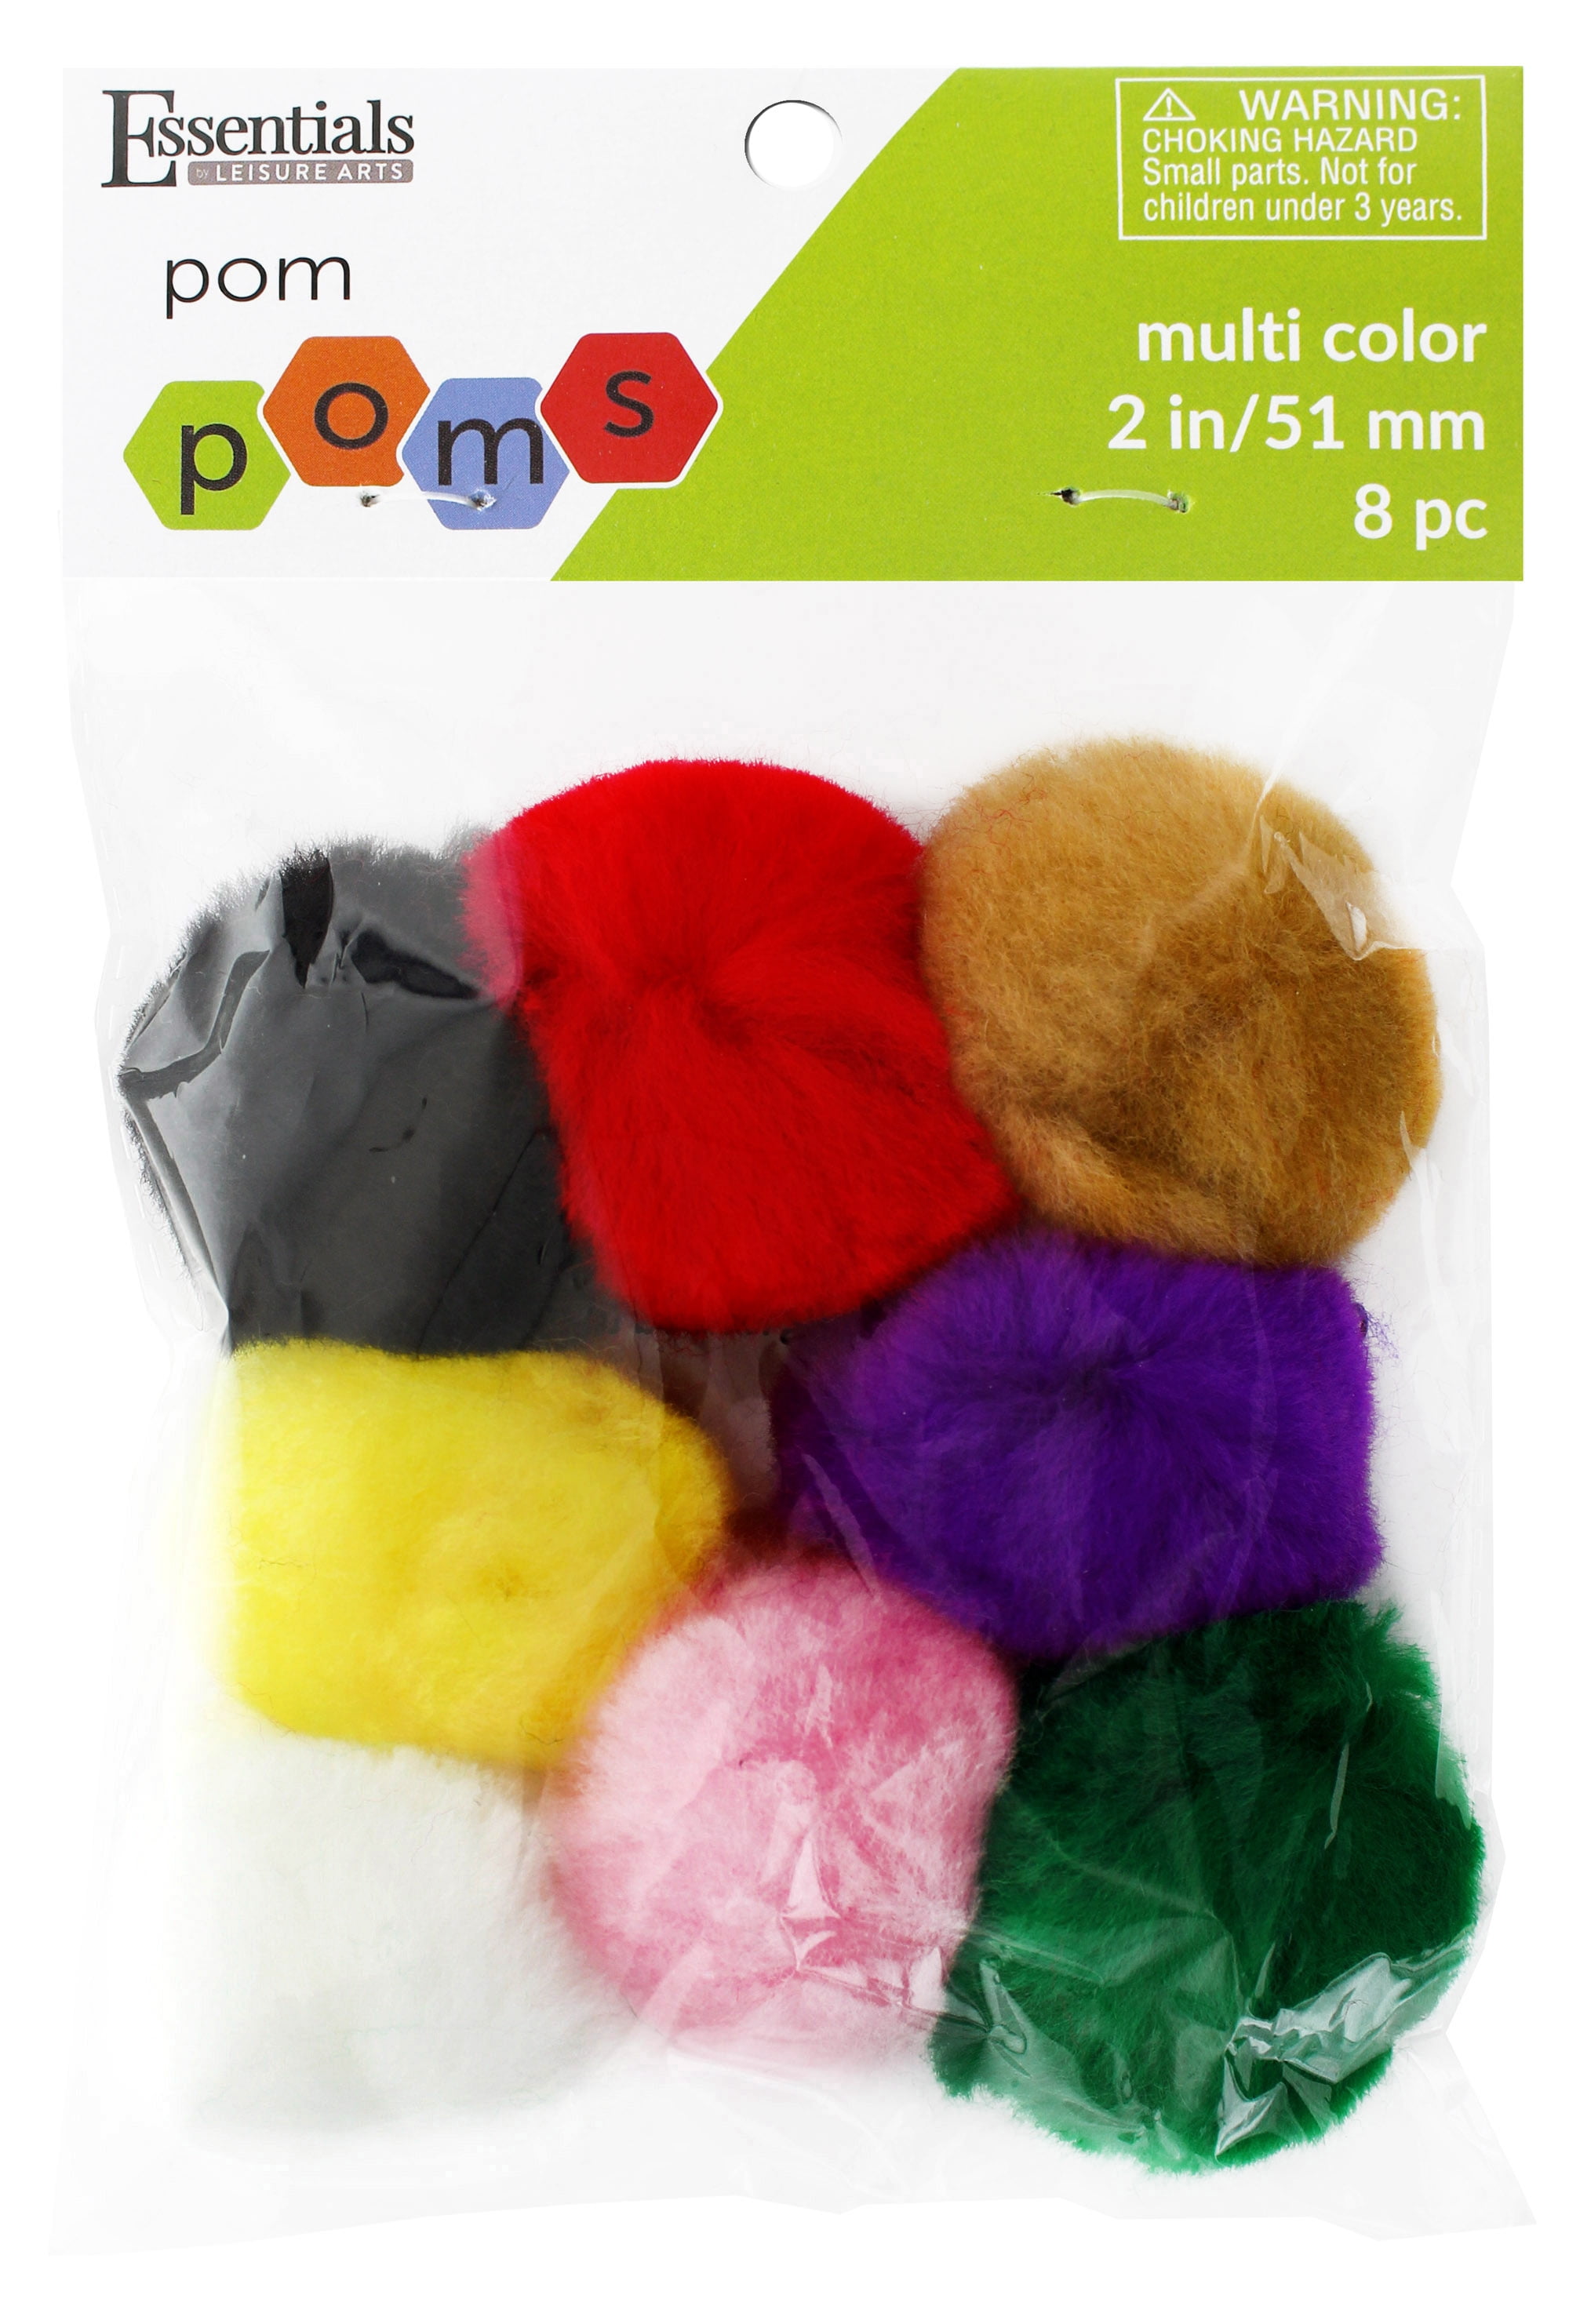 Essentials by Leisure Arts Pom Poms - Green -10mm - 100 piece pom poms arts  and crafts - colored pompoms for crafts - craft pom poms - puff balls for